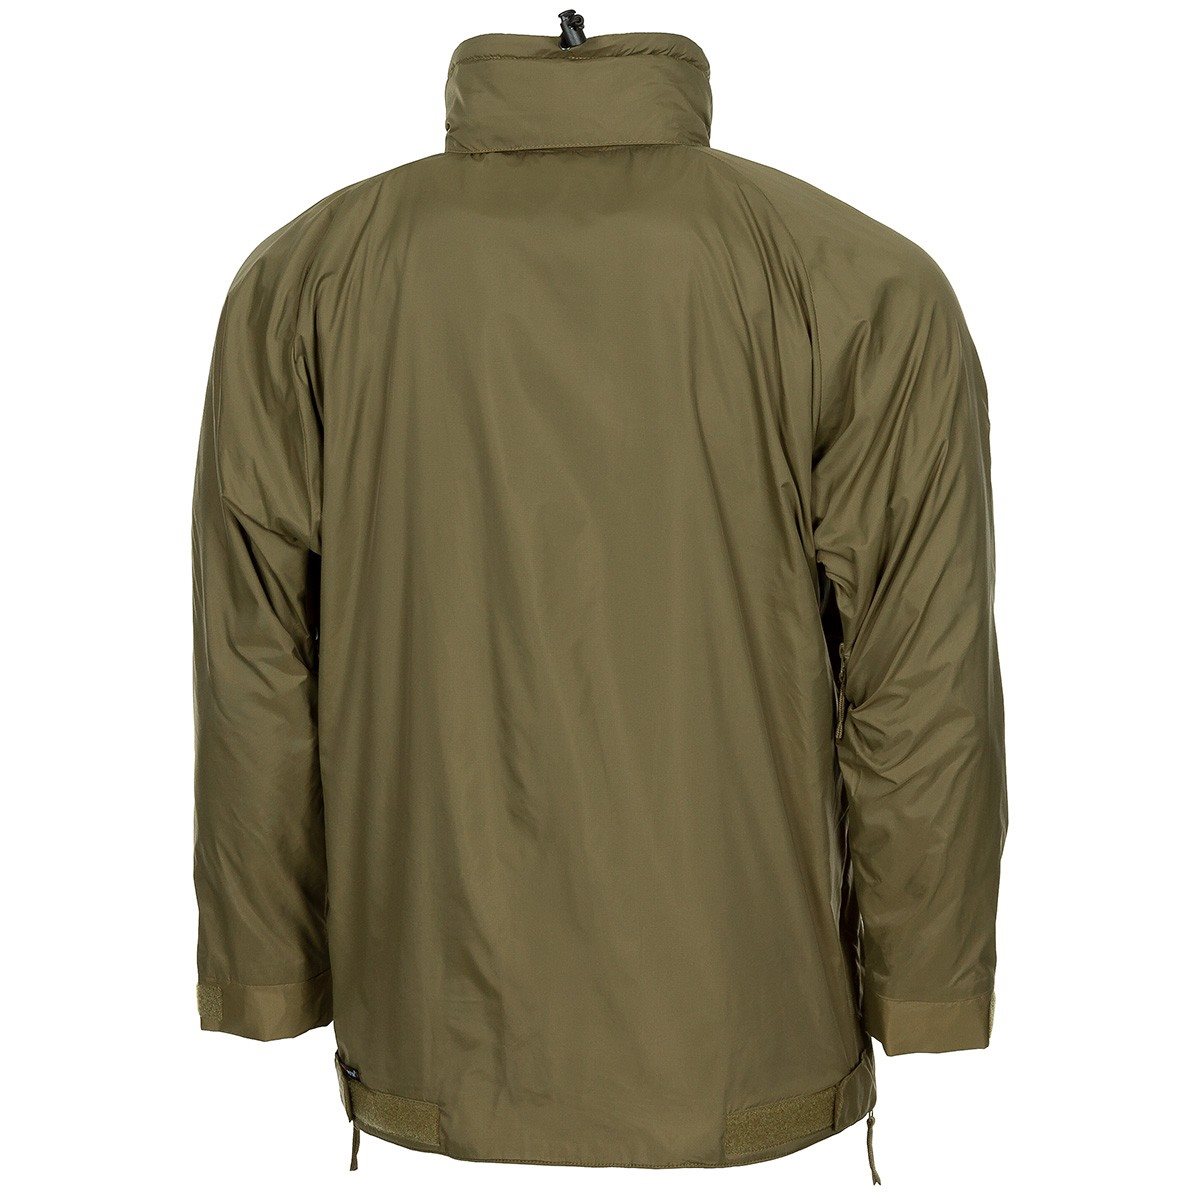 GB Thermal LIGHTWEIGHT Jacket OLIVE GREEN MFH Defence 03682B L-11